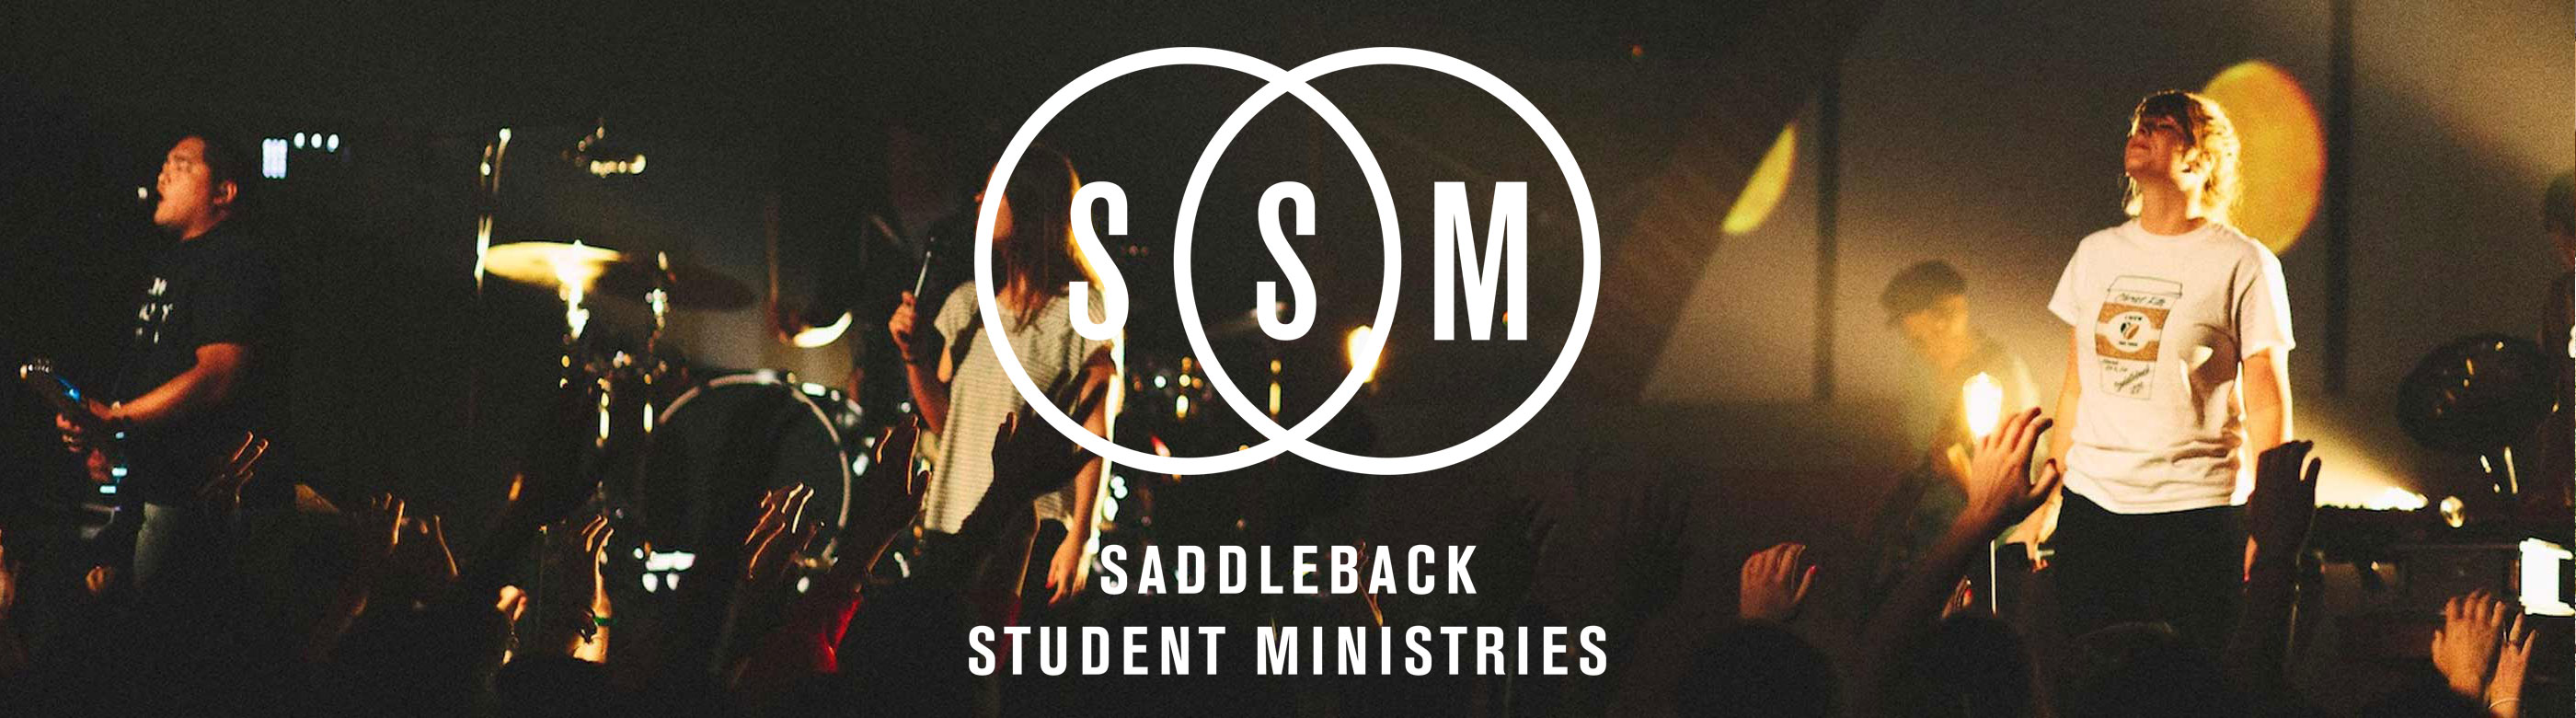 ministry student ministries saddleback hsm church ssm